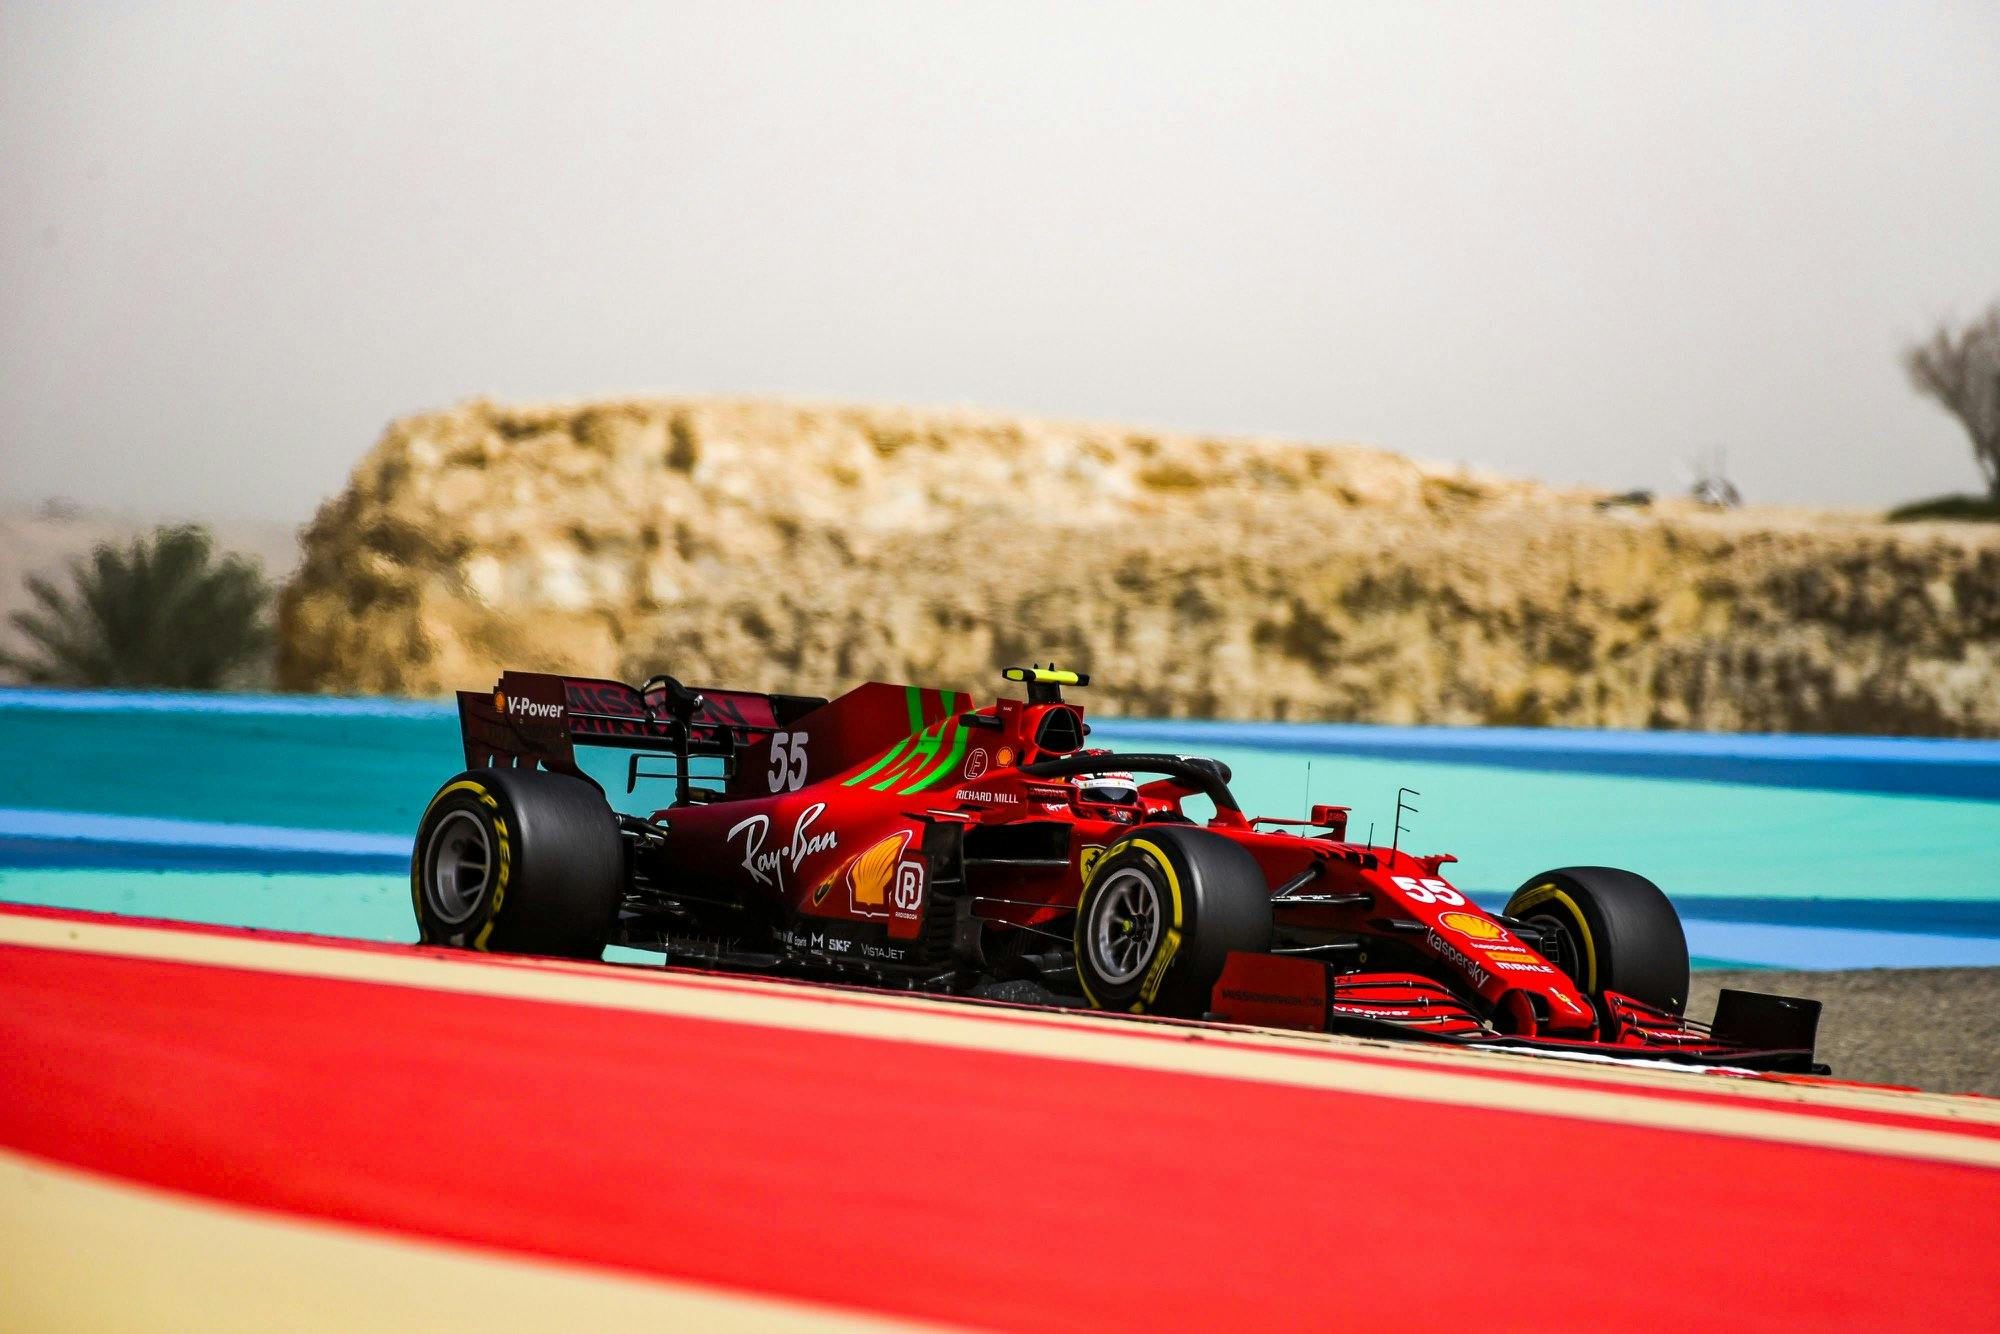 Ferrari deklaruje poprawę silnika